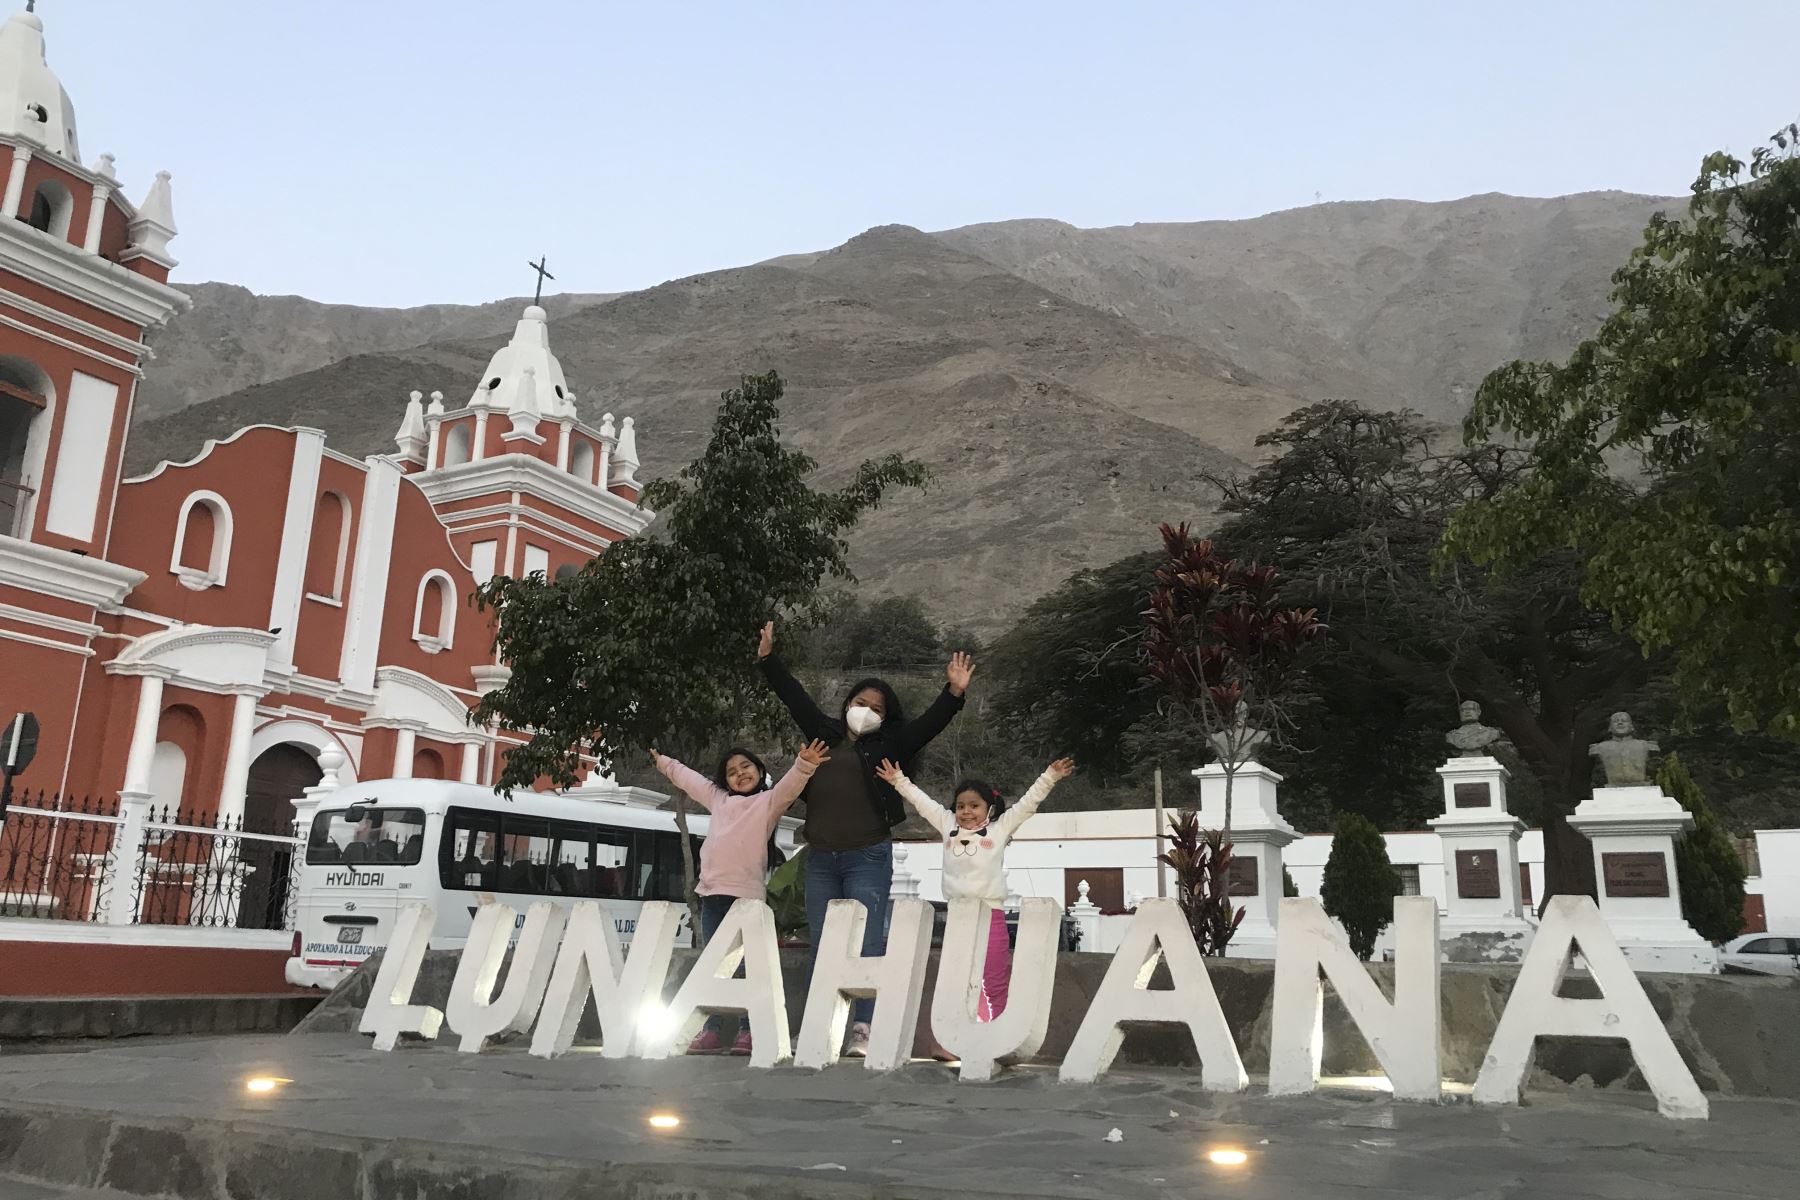 El pintoresco destino de Lunahuaná recibe el sello internacional Safe Travels. Foto: ANDINA/Braian Reyna